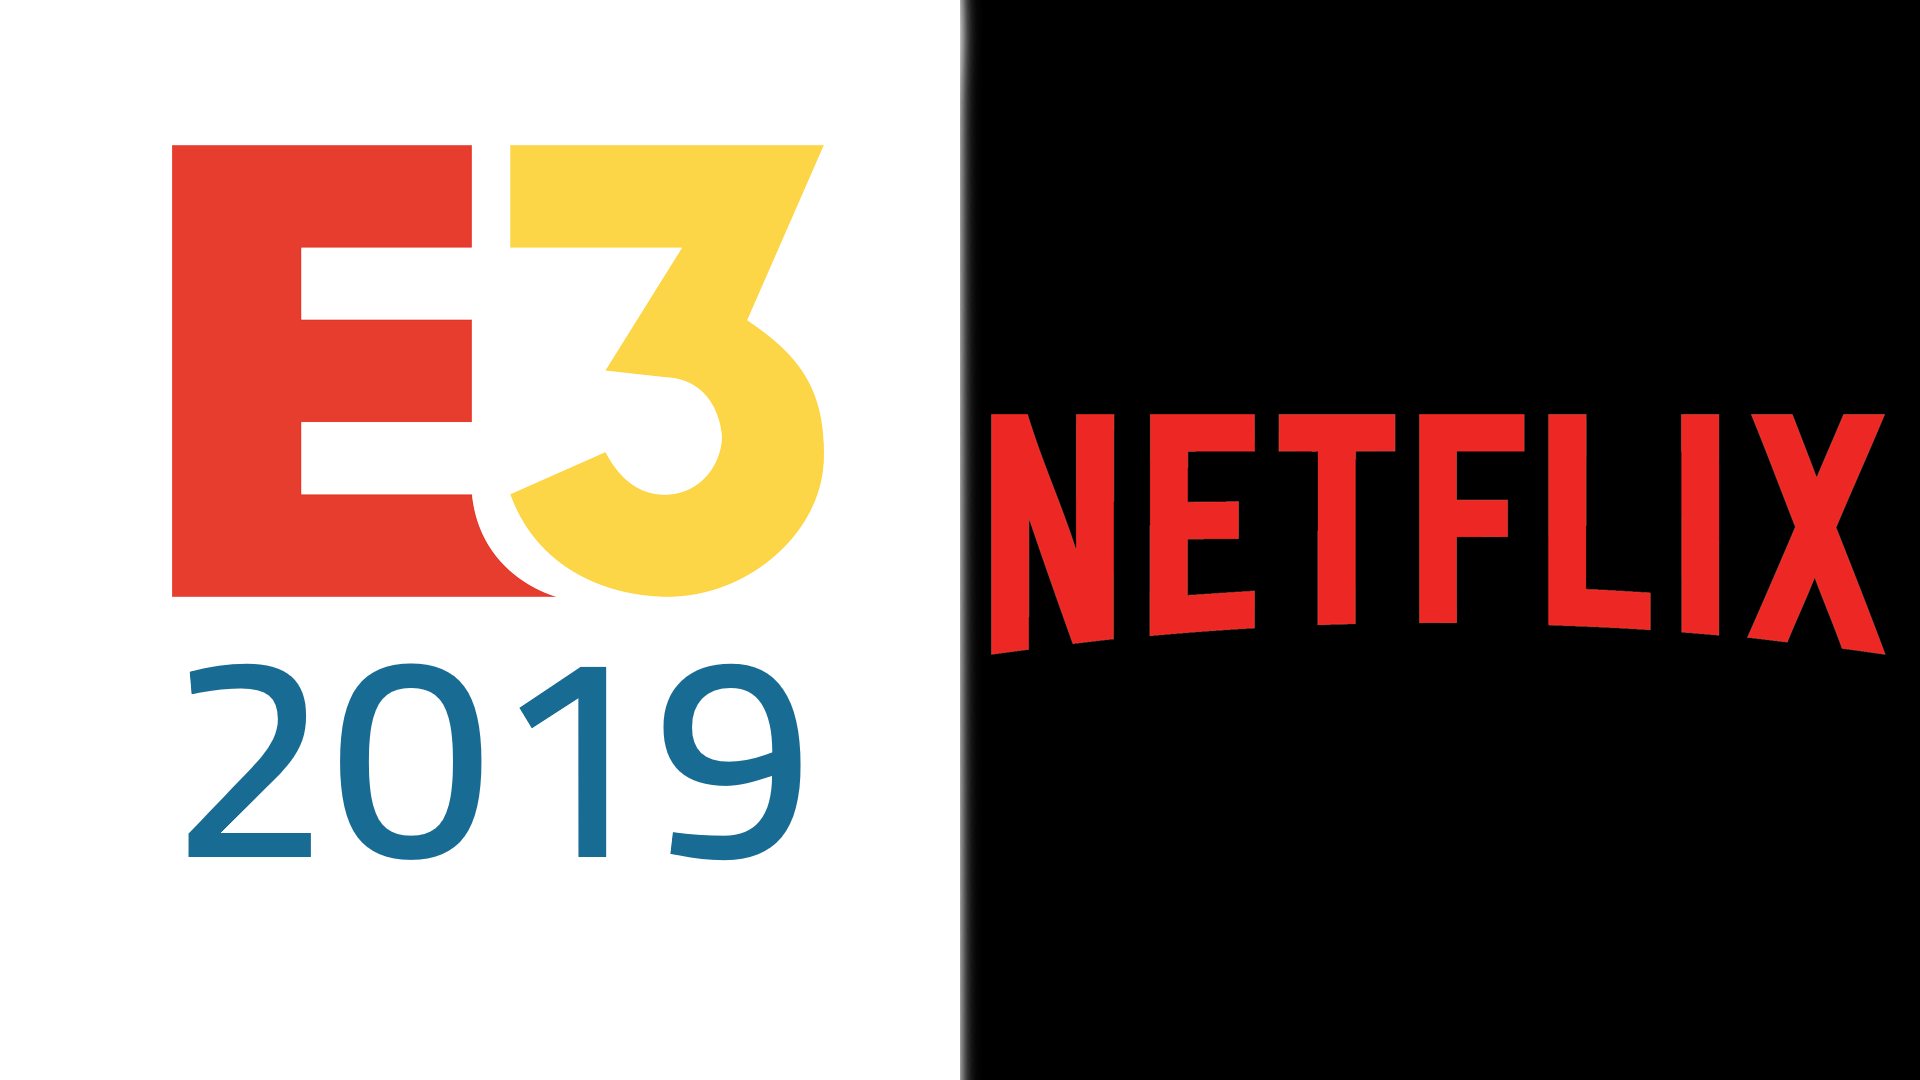 Netflix sarà presente all’E3 2019